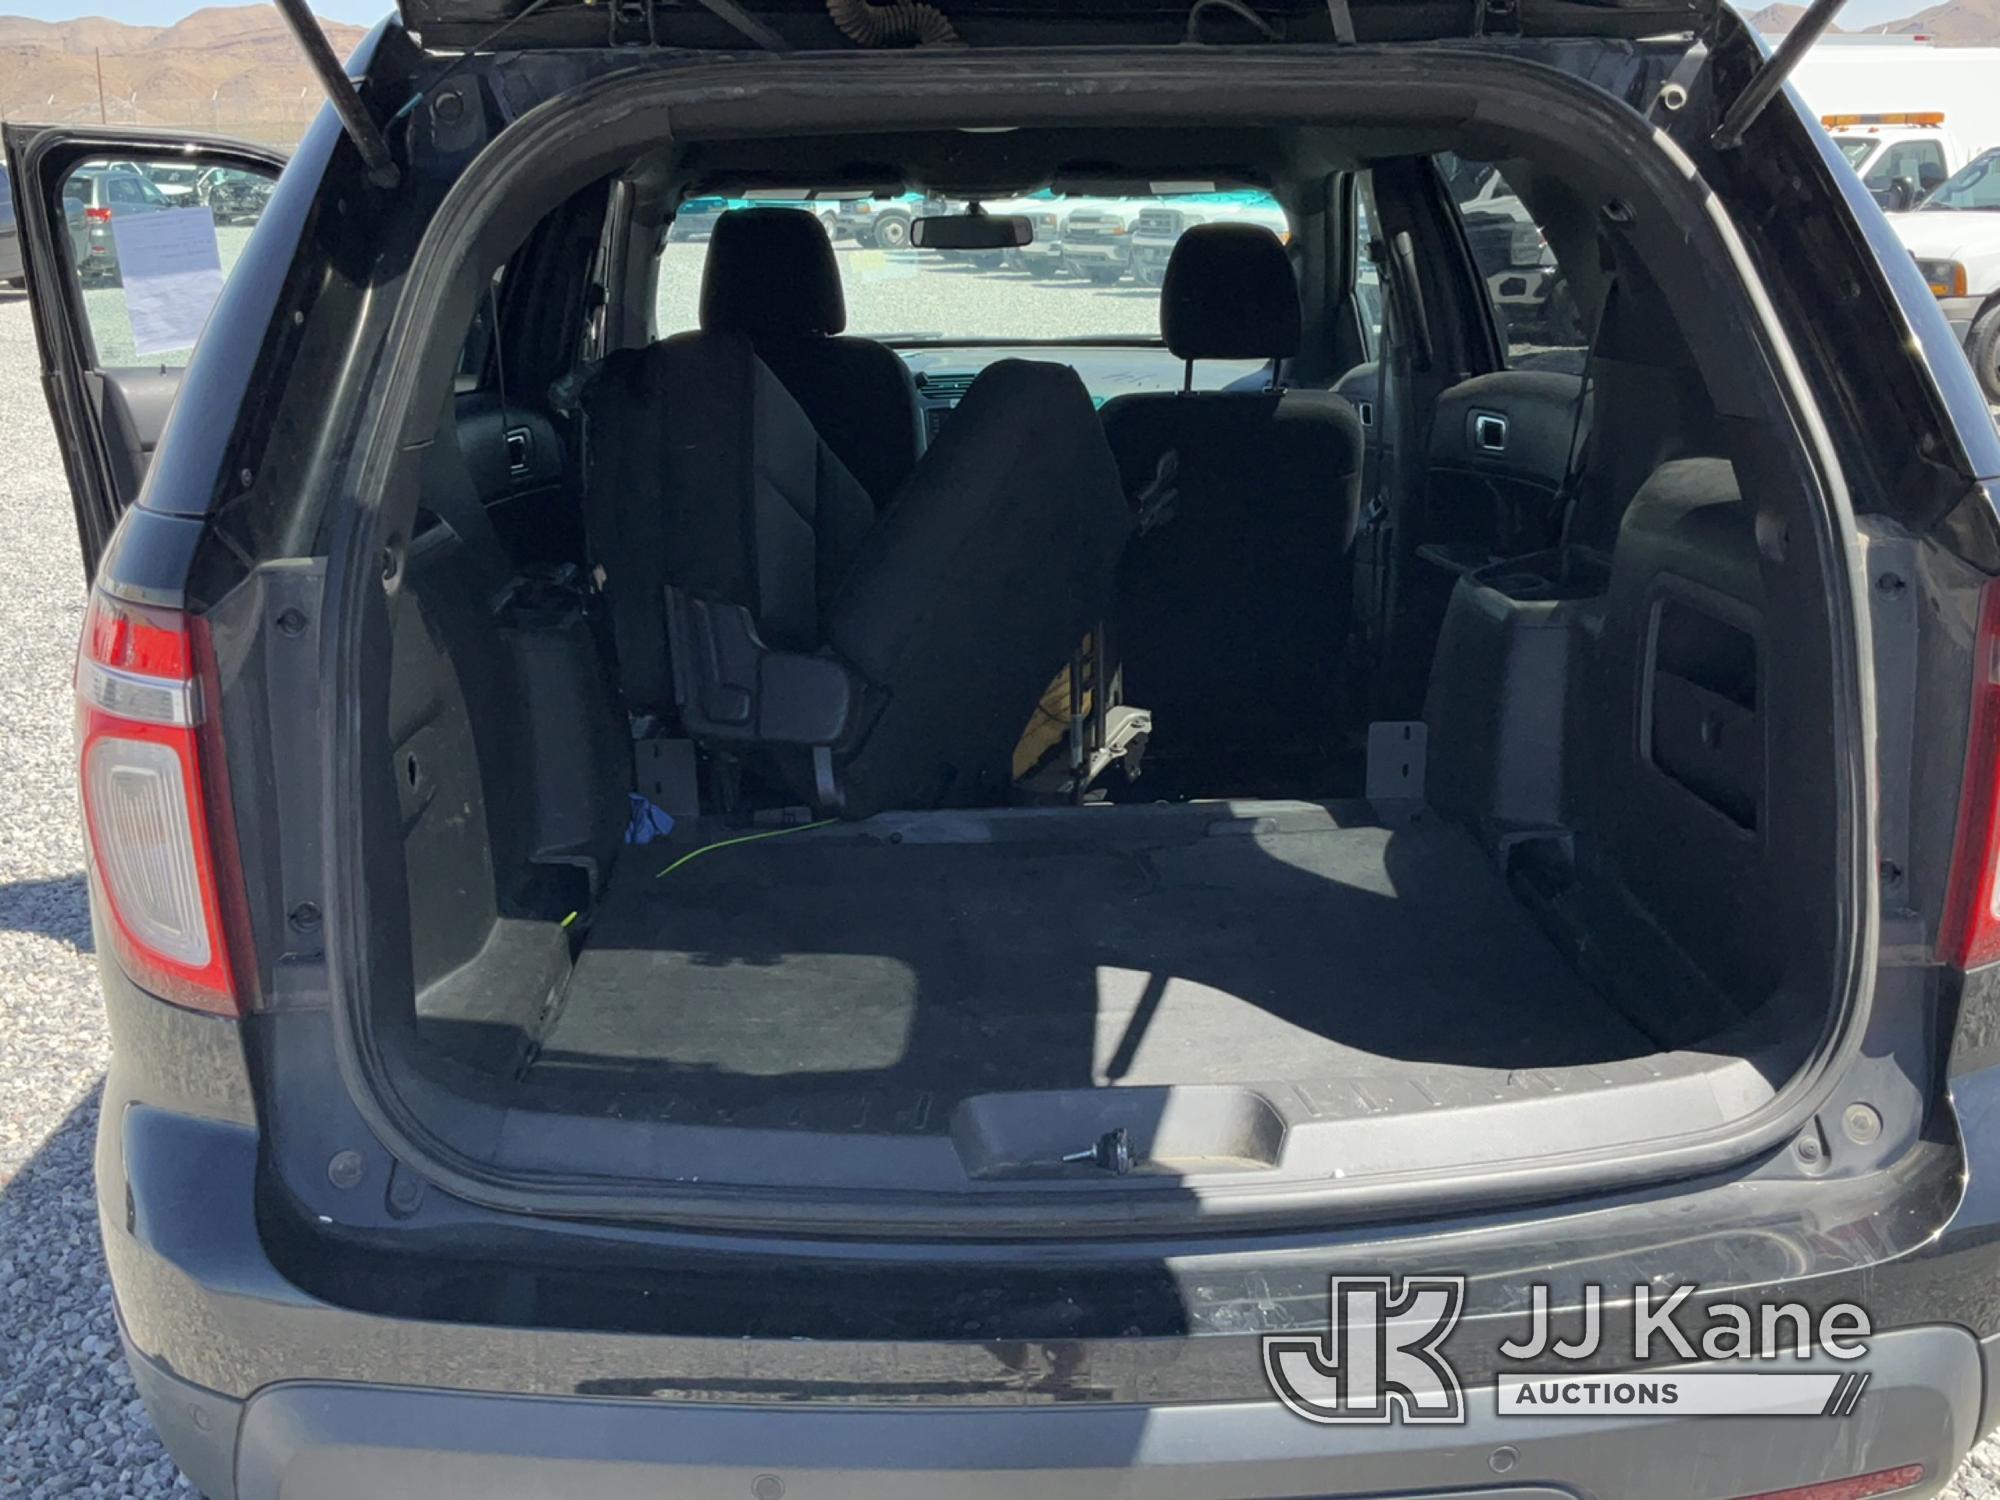 (Las Vegas, NV) 2014 Ford Explorer AWD Police Interceptor No Console, Rear Seats Unbolted Runs & Mov